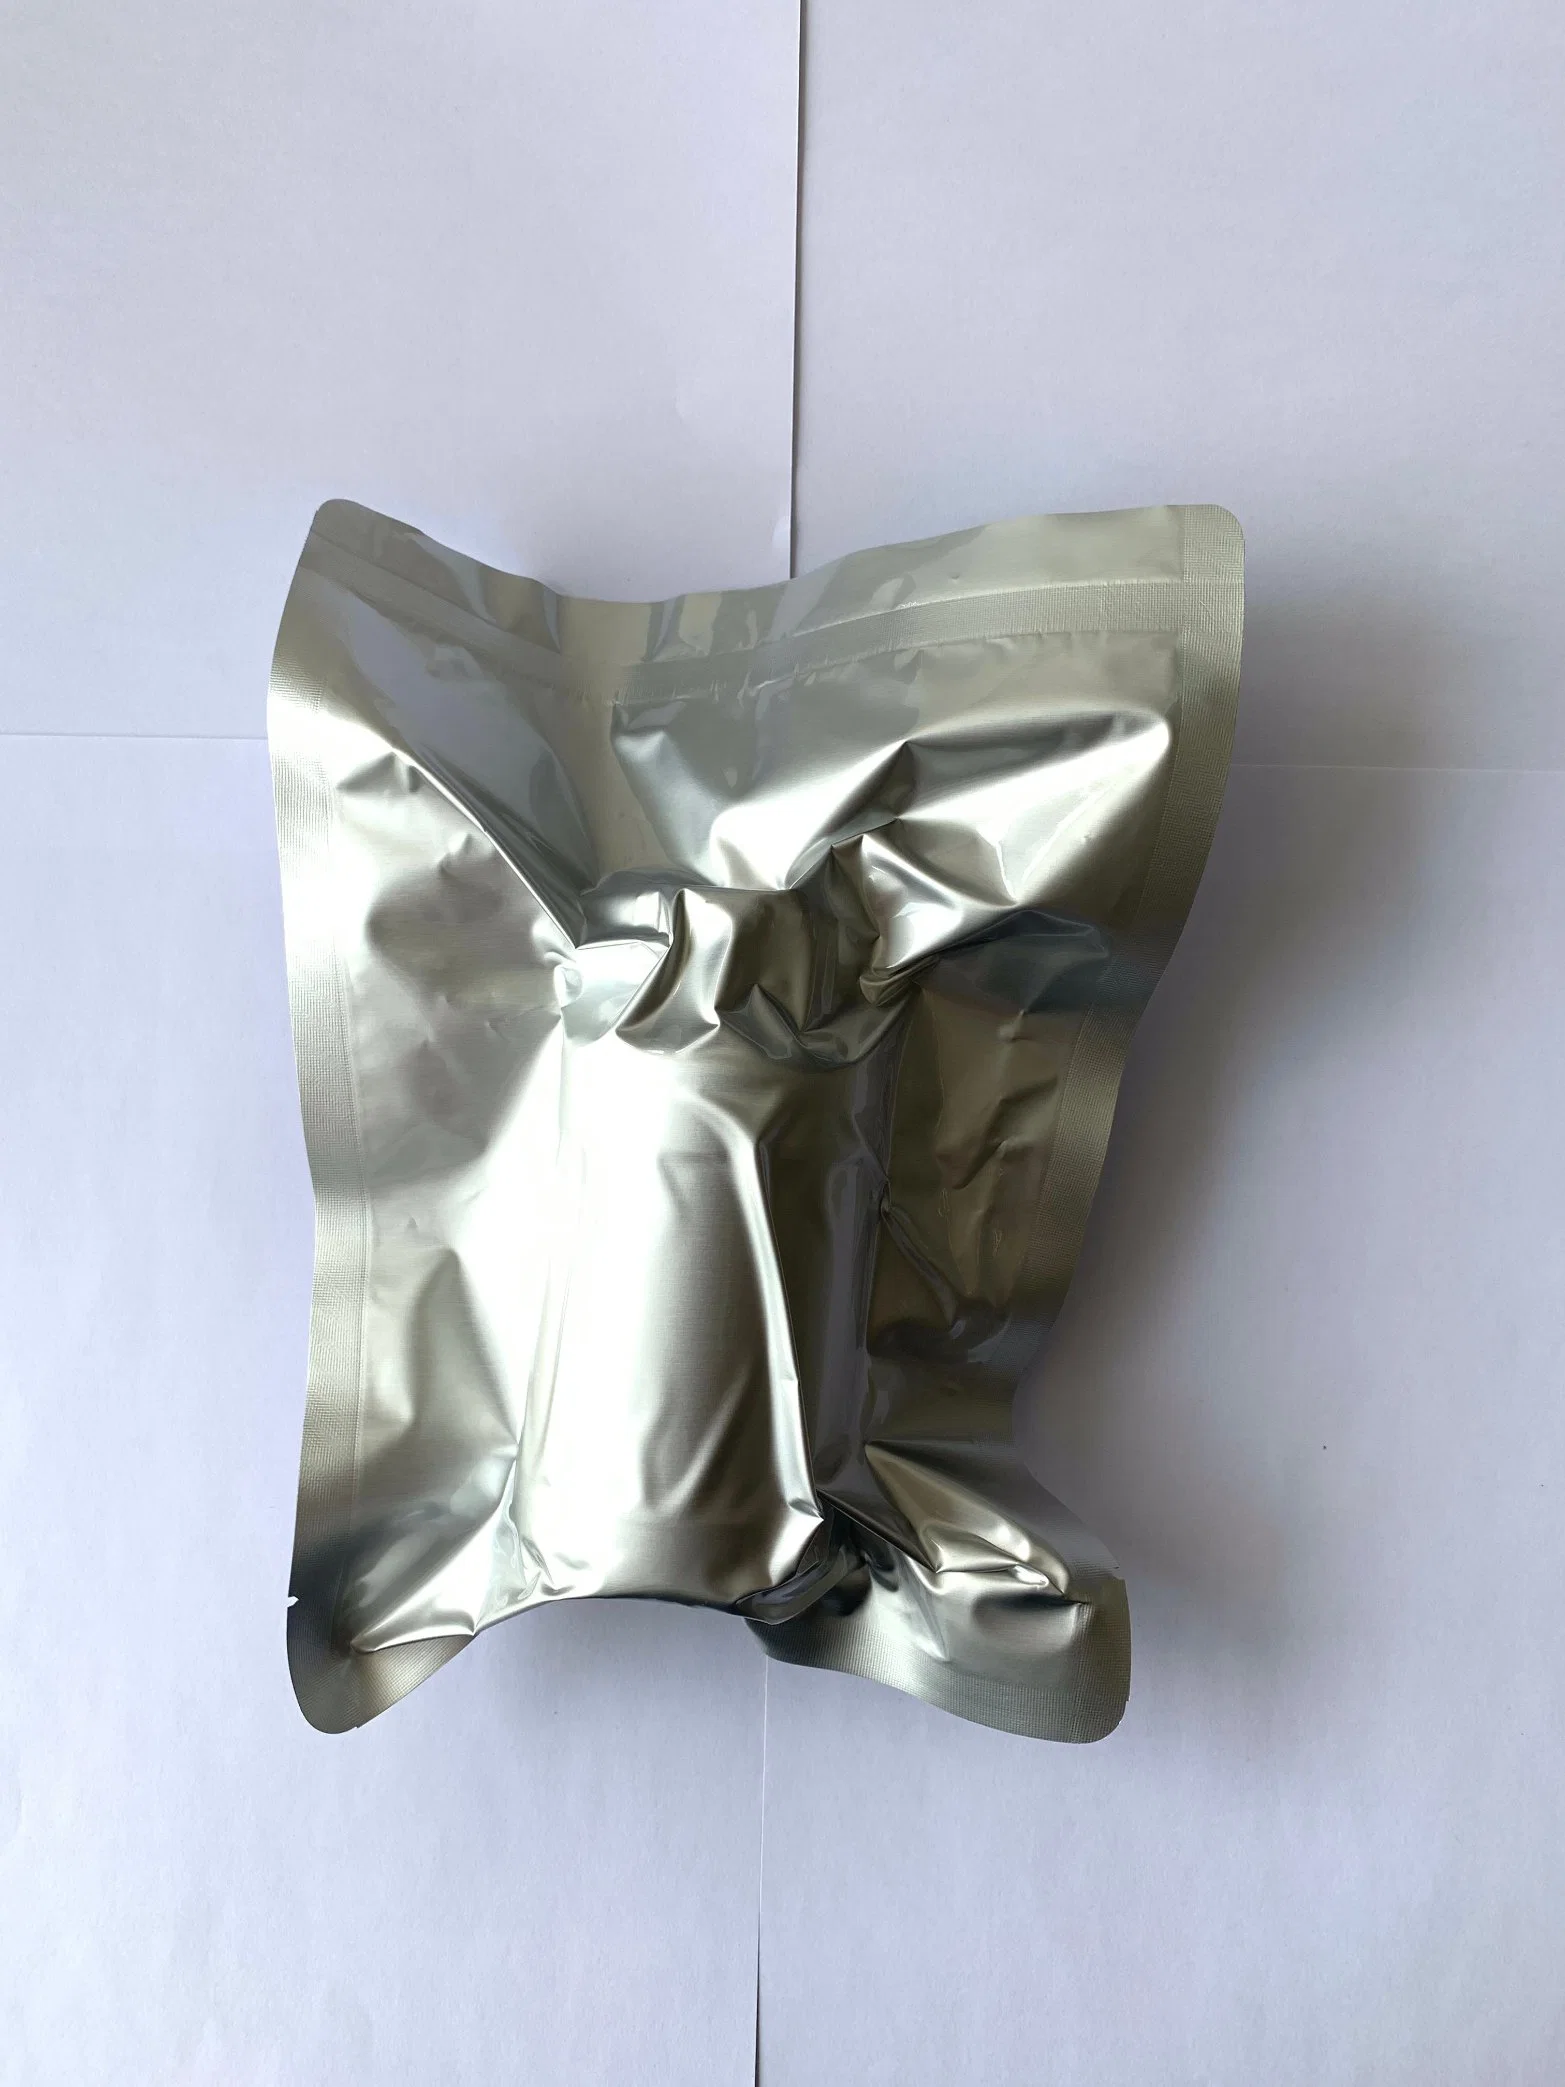 Cloruro de dialildimetilamonio de alta pureza con 60% de pureza CAS 7398-69-8 Dmdaac